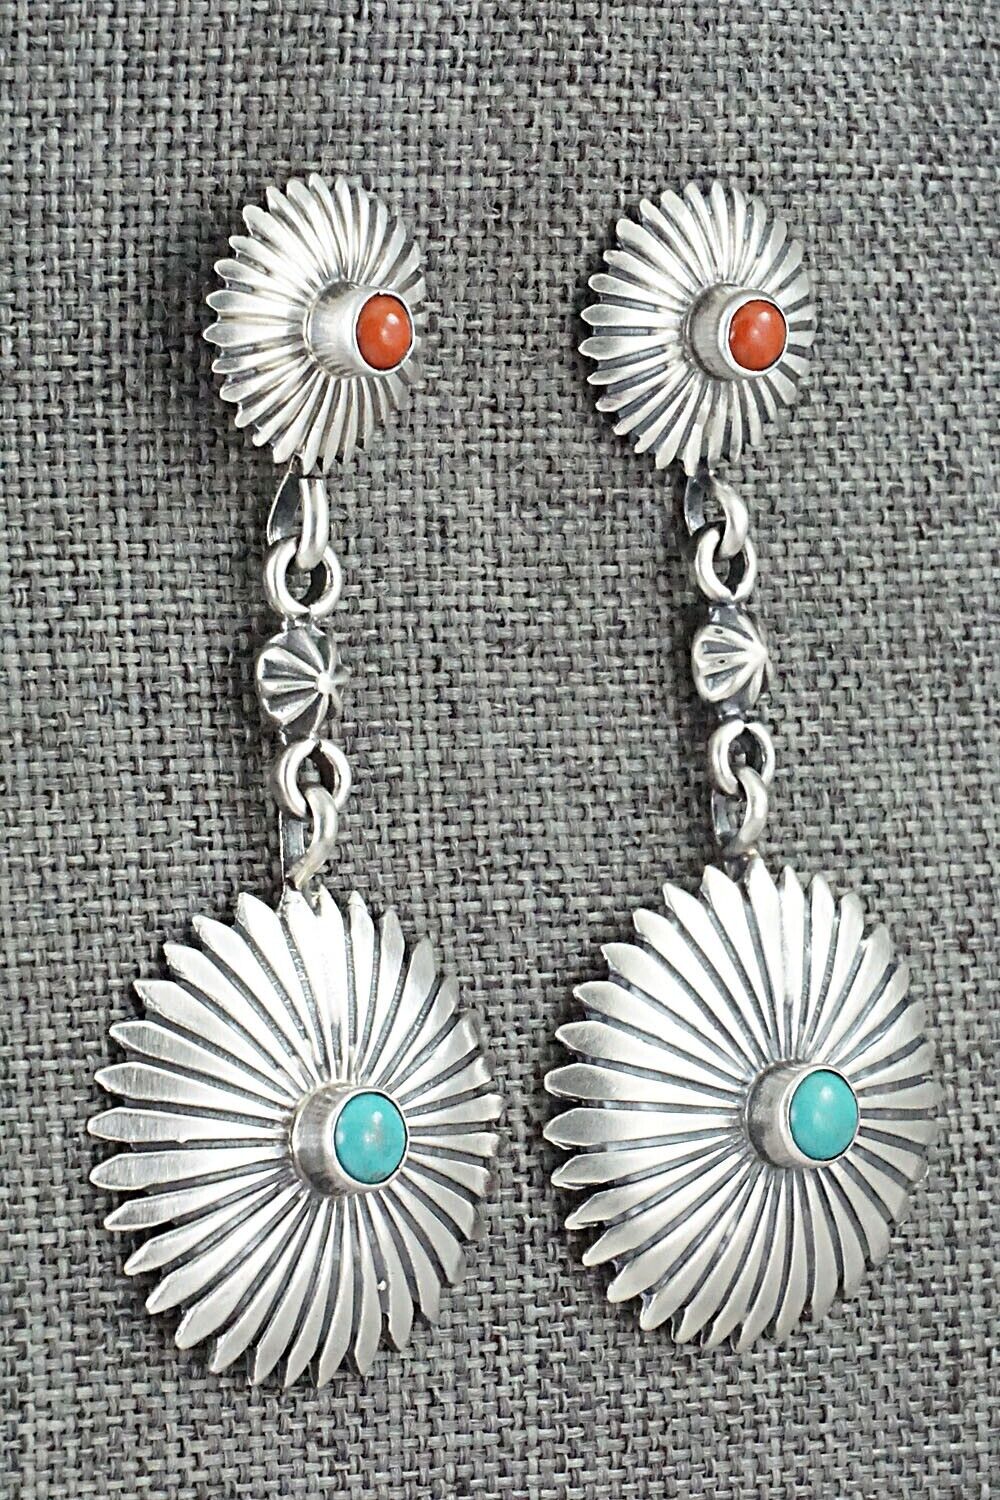 Turquoise, Coral & Sterling Silver Earrings - Verley Betone